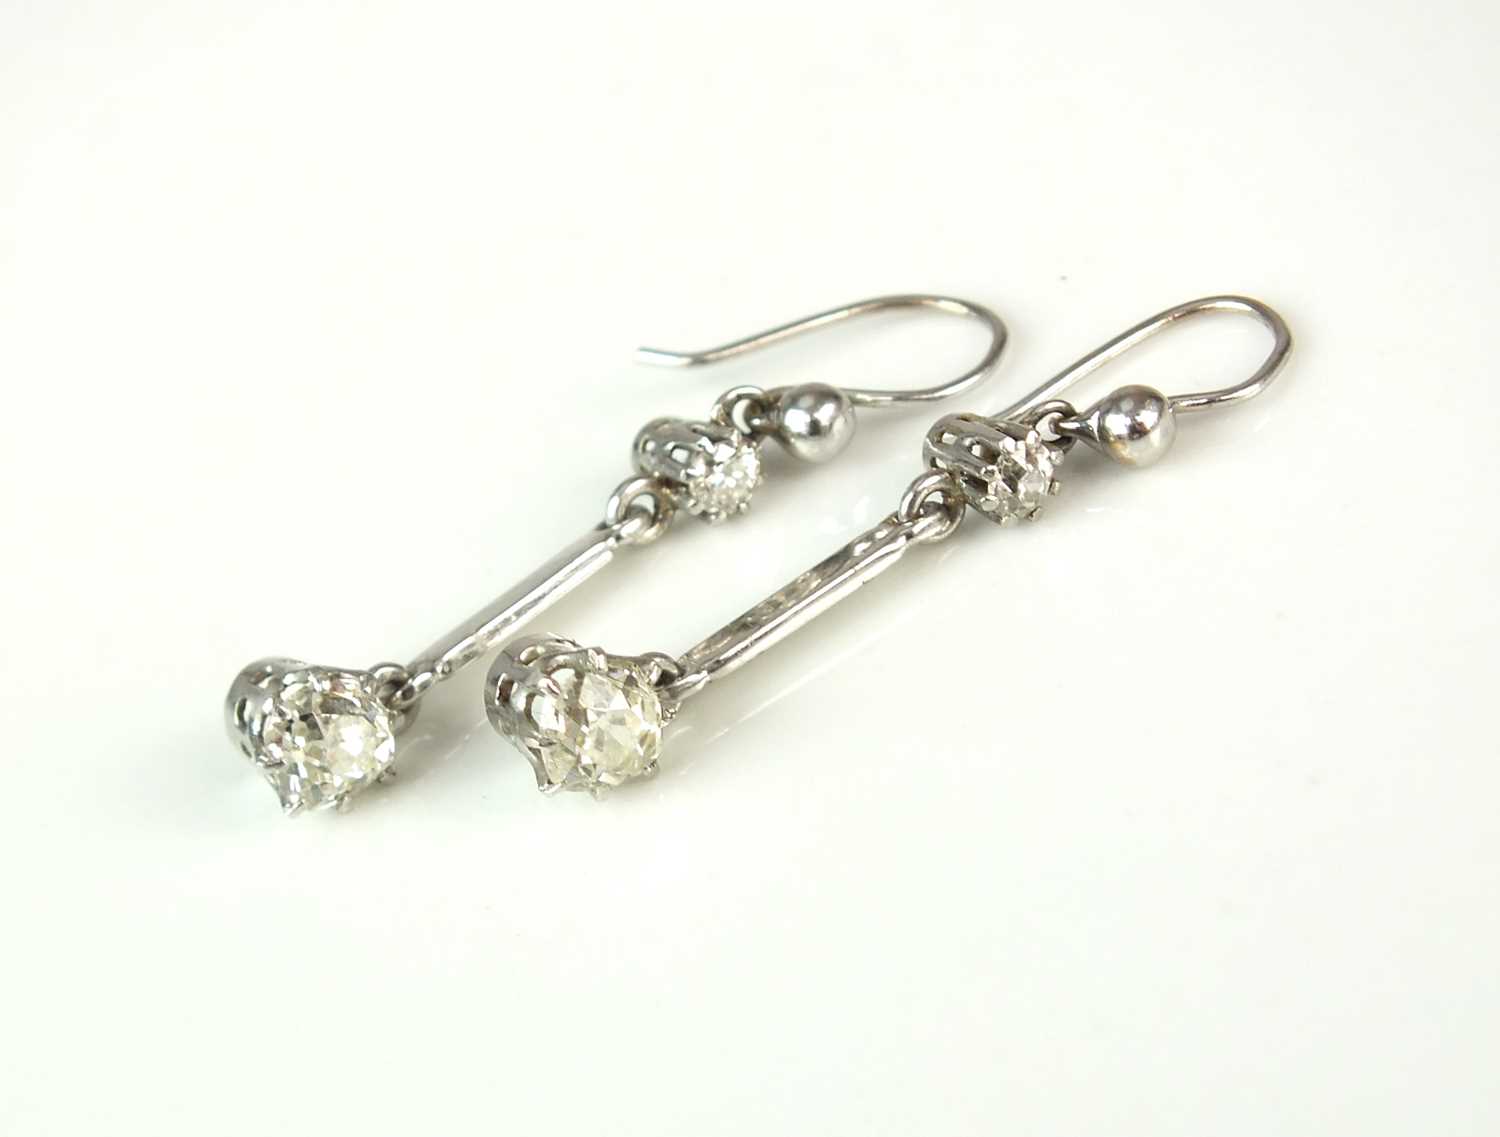 A pair of diamond ear pendants